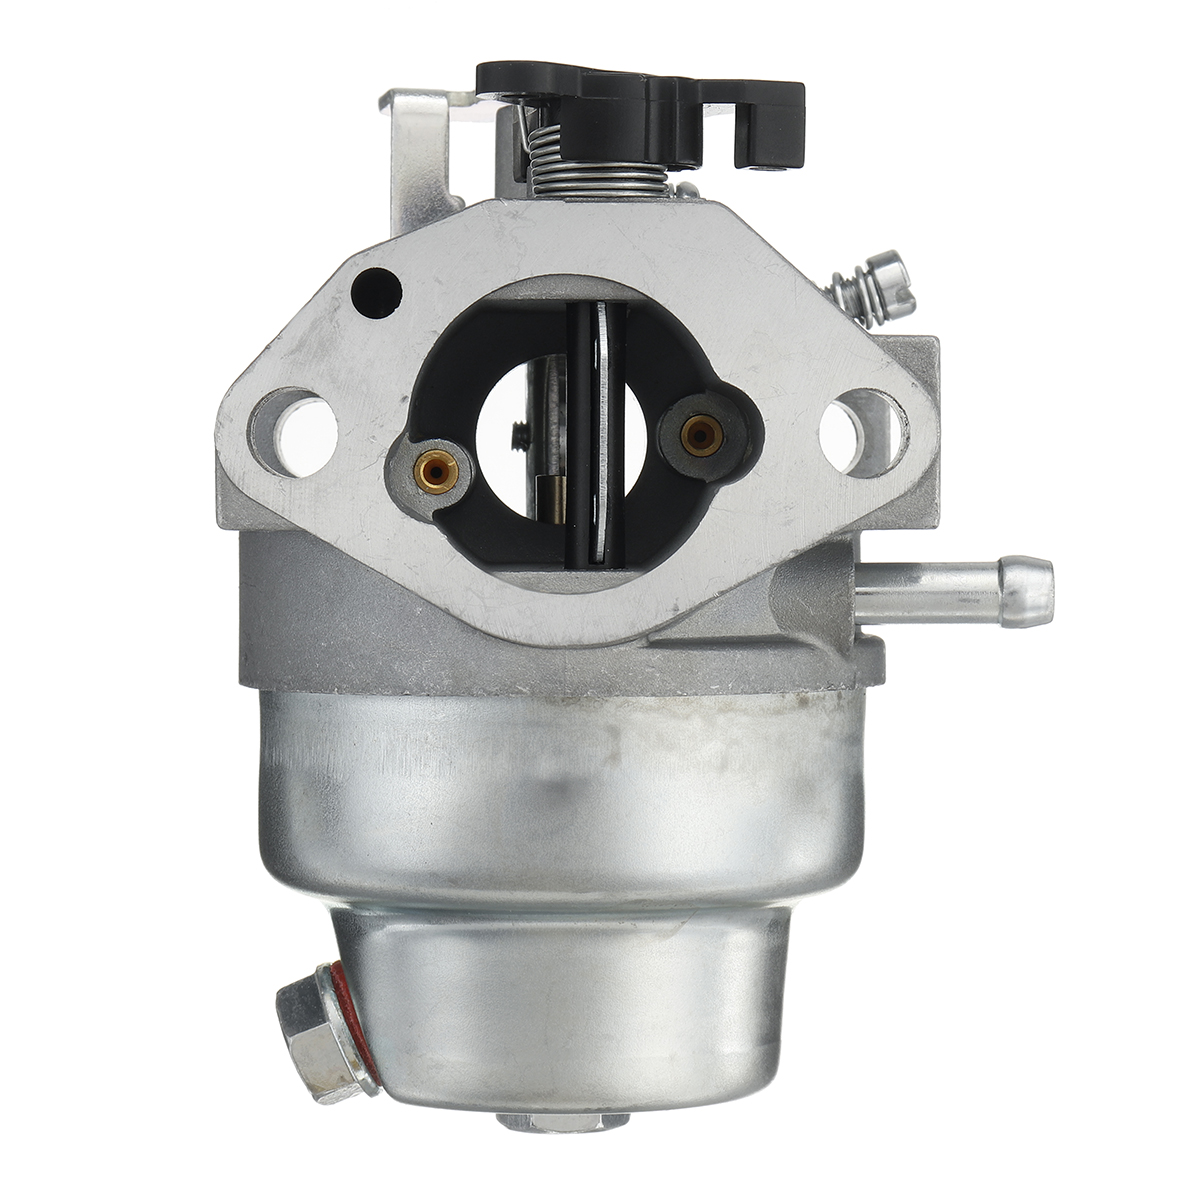 Carburetor-Intake-Kit-Air-Filter-Gaskets-with-Fuel-Line-for-Honda-GCV160-GCV135-Mower-Engine-HRU19R--1842970-4